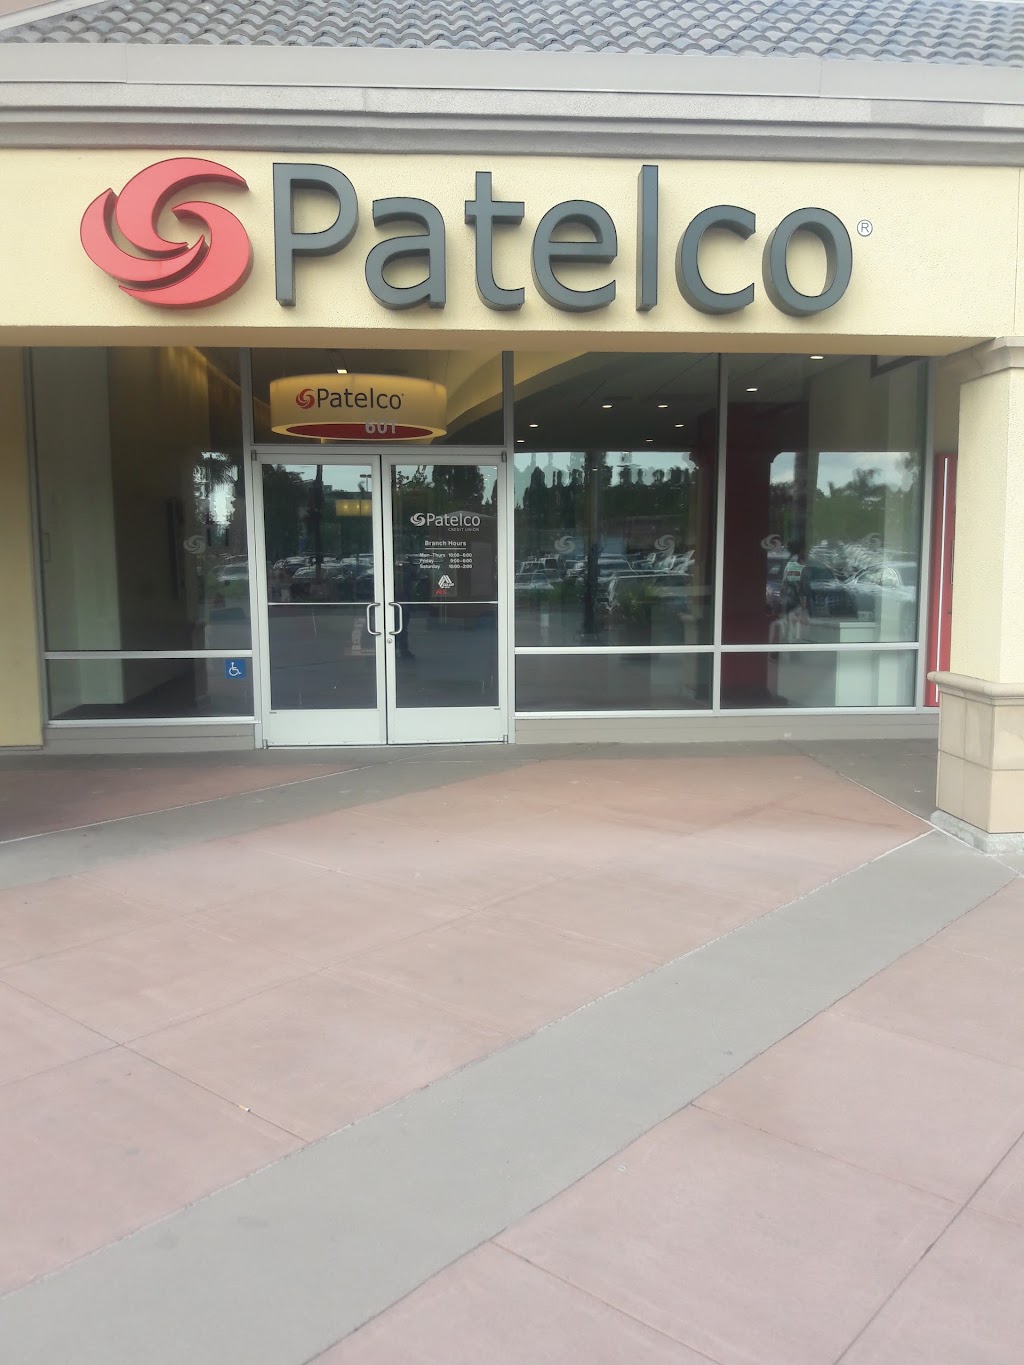 Patelco Credit Union | 601 E Calaveras Blvd, Milpitas, CA 95035, USA | Phone: (800) 358-8228